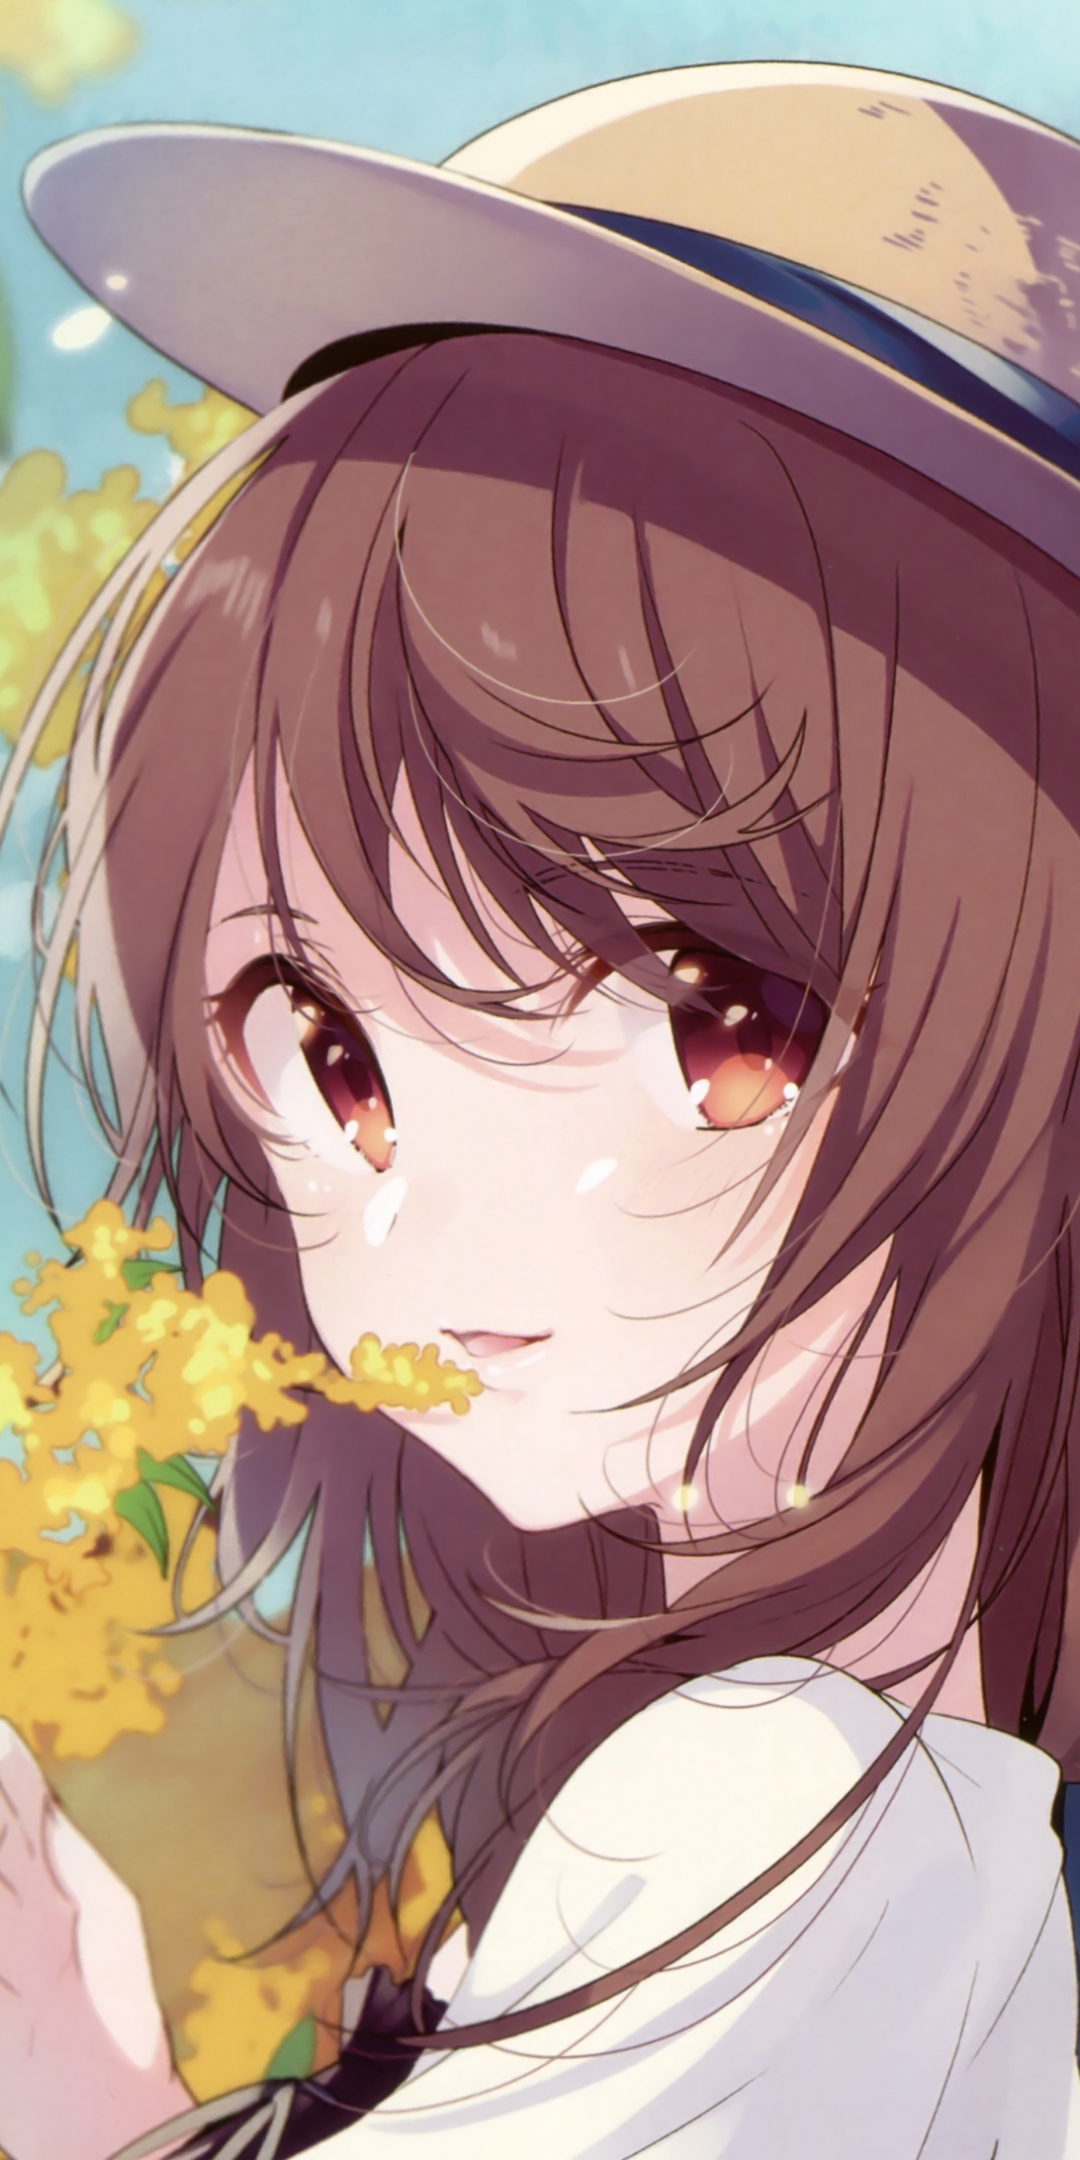 Autumn, tree branch, anime girl, cute, 1080x2160 wallpaper